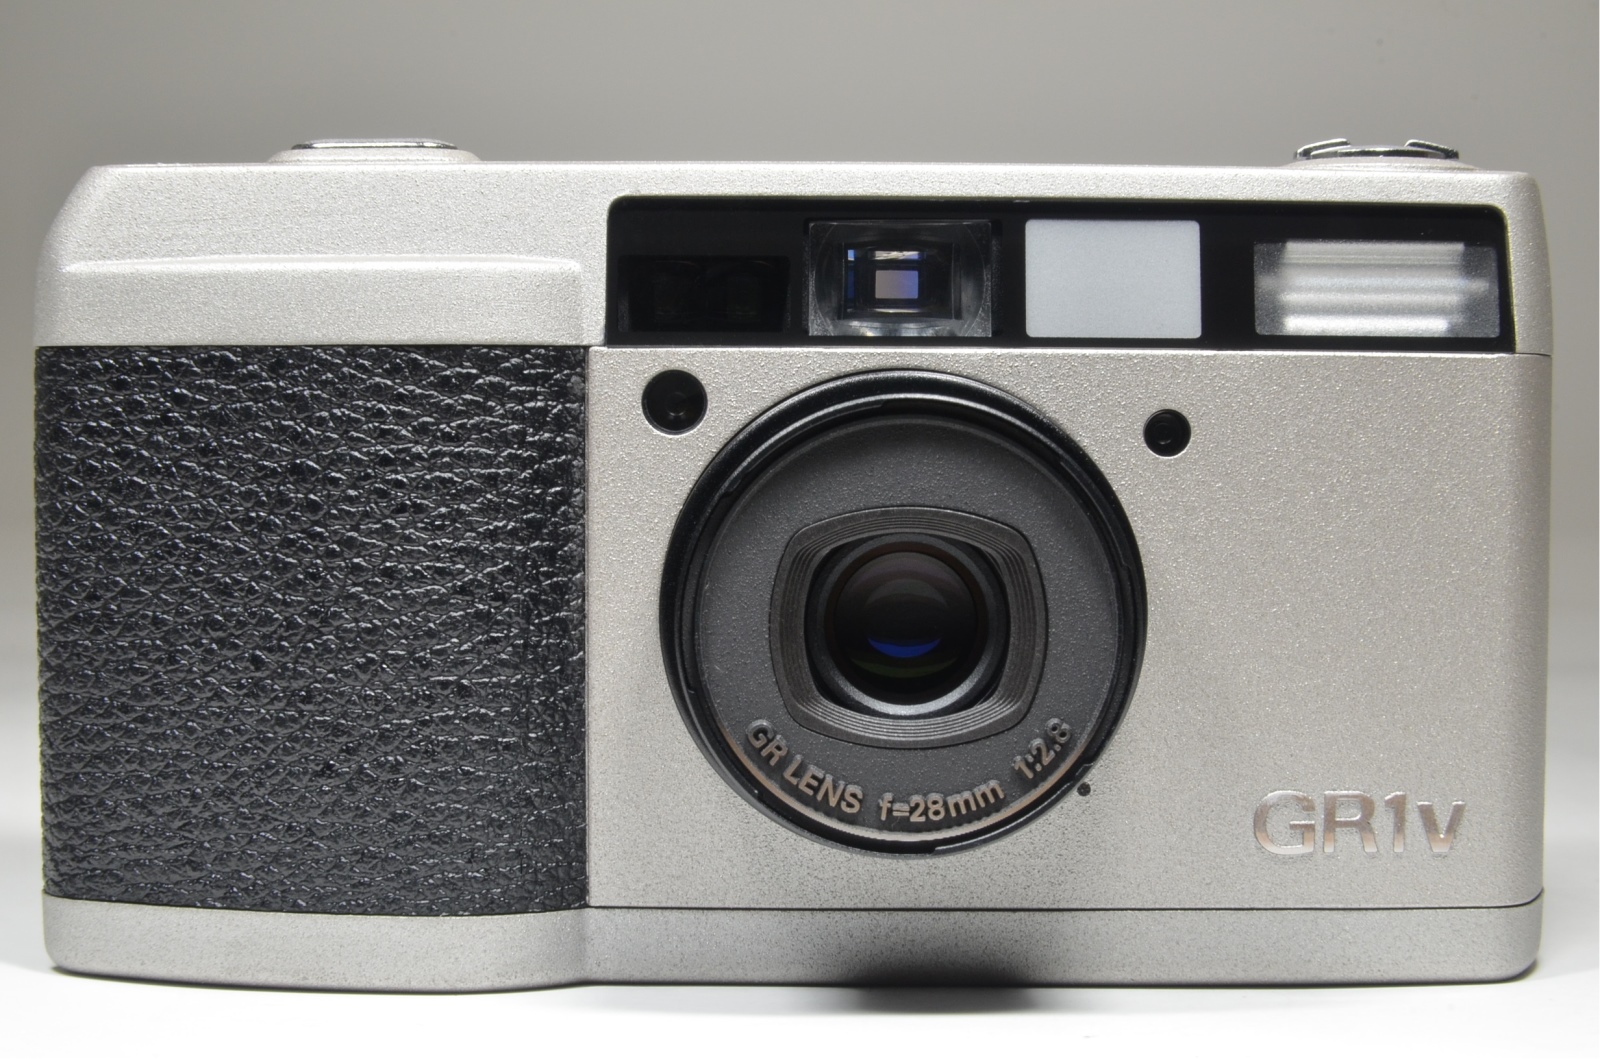 ricoh gr1v date p&s 35mm film camera 28mm f2.8 'outlet item unused' top mint!